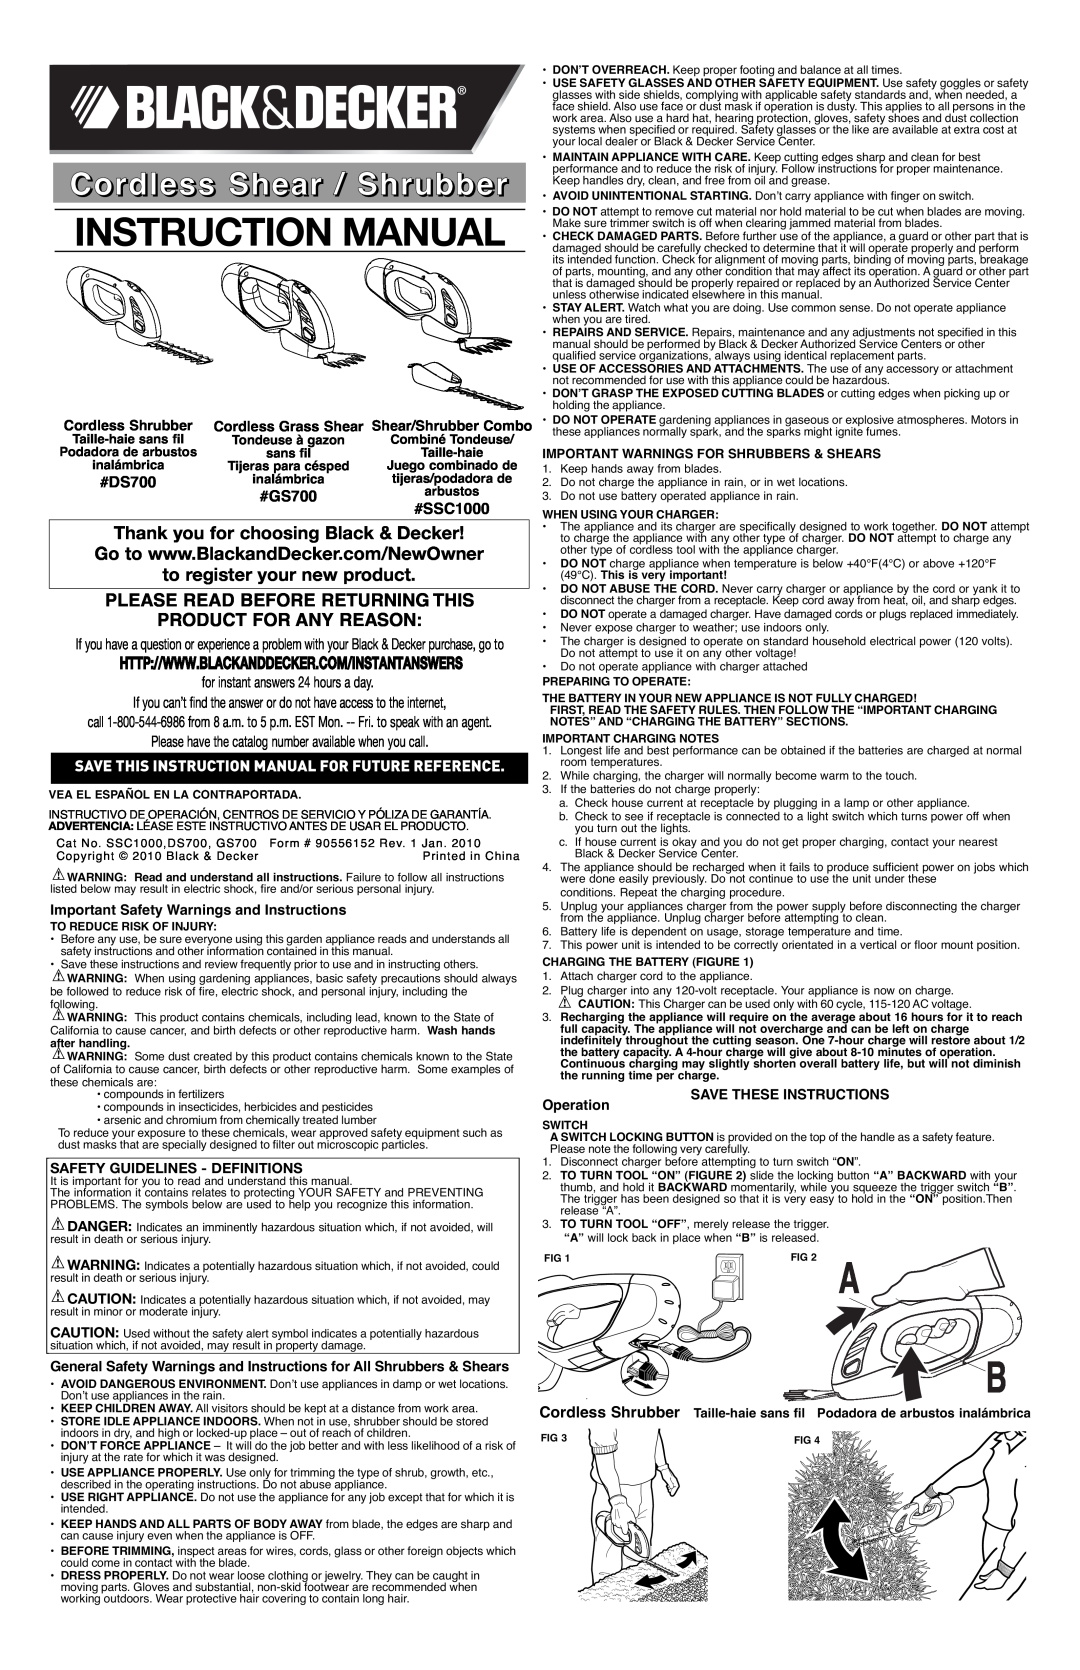 Black & Decker instruction manual Cordless Shear / Shrubber, Thank you for choosing Black & Decker, #DS700, #GS700 